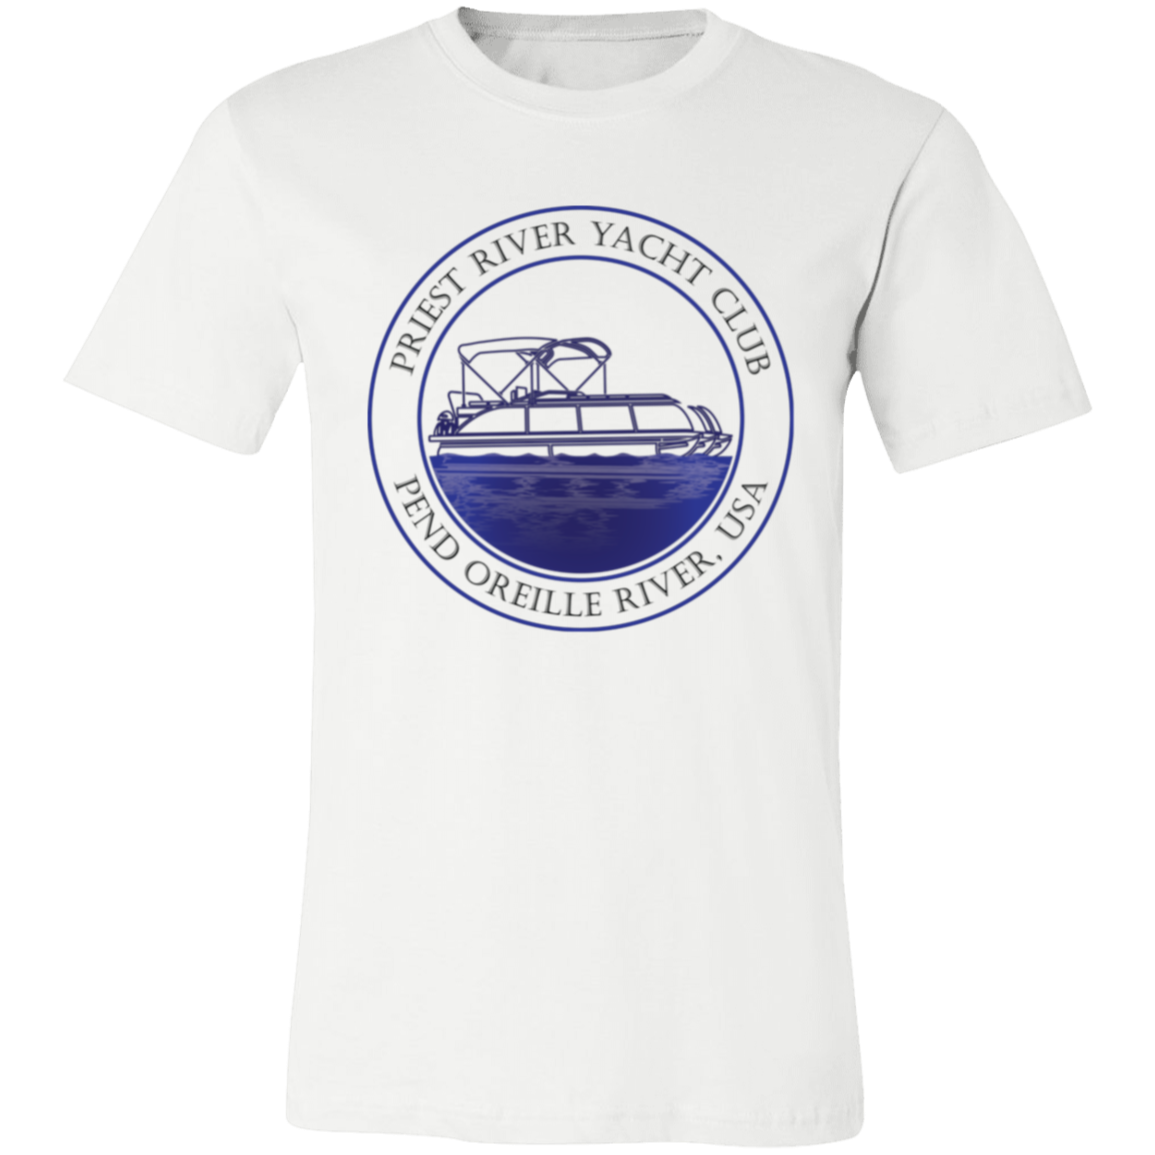 Priest River Yacht Club - Shirt